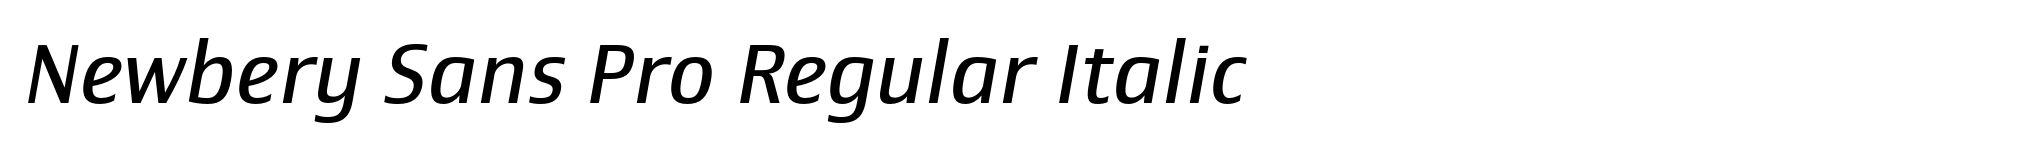 Newbery Sans Pro Regular Italic image